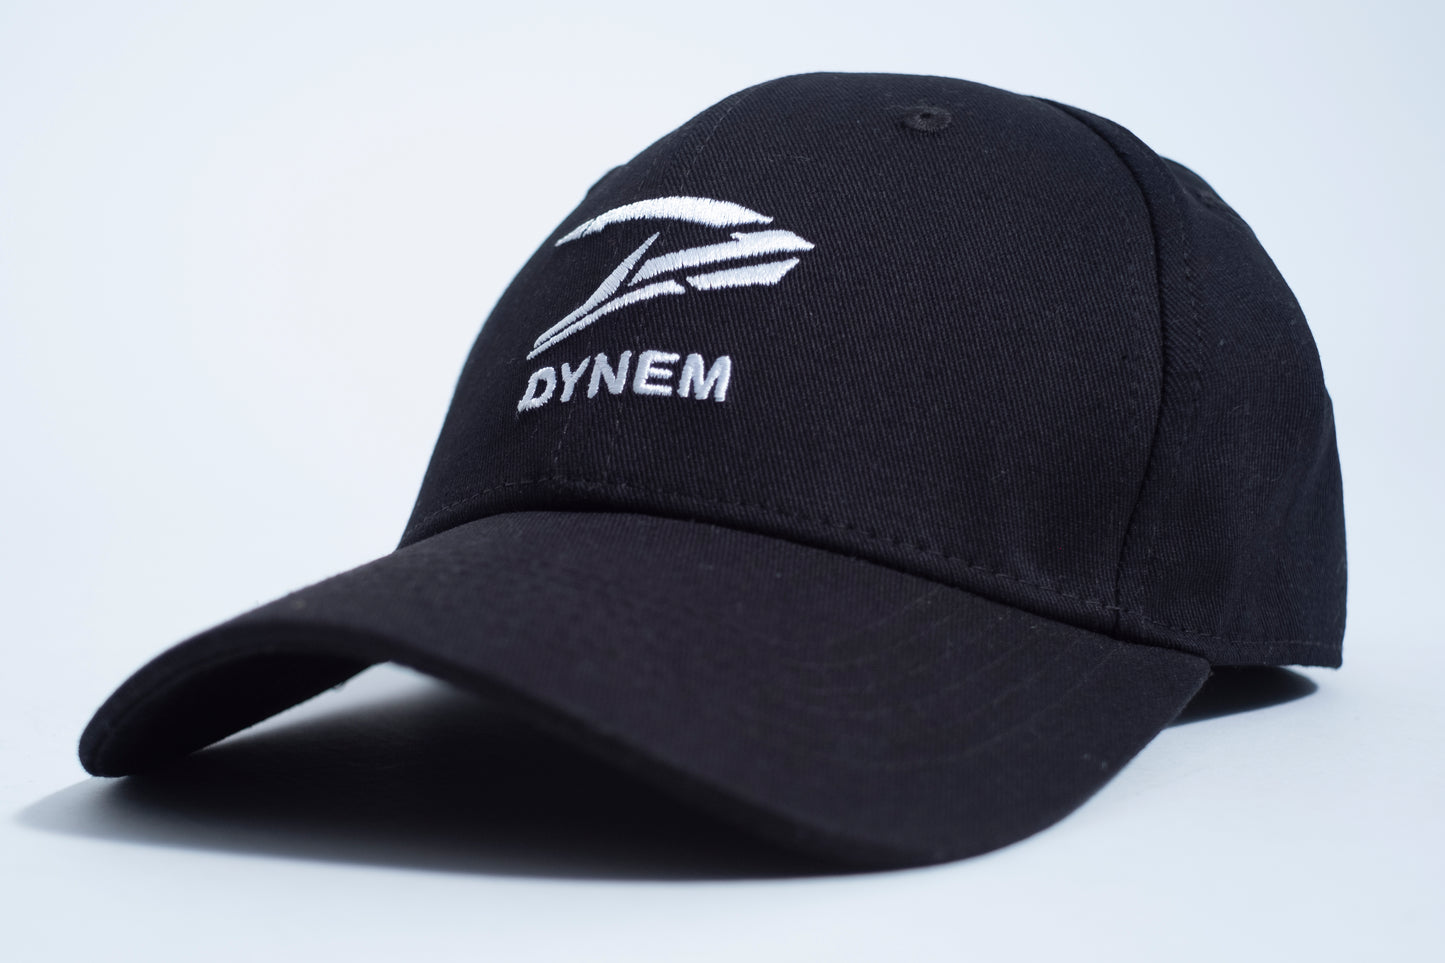 Dynem™ Baseball Cap in Black & White 